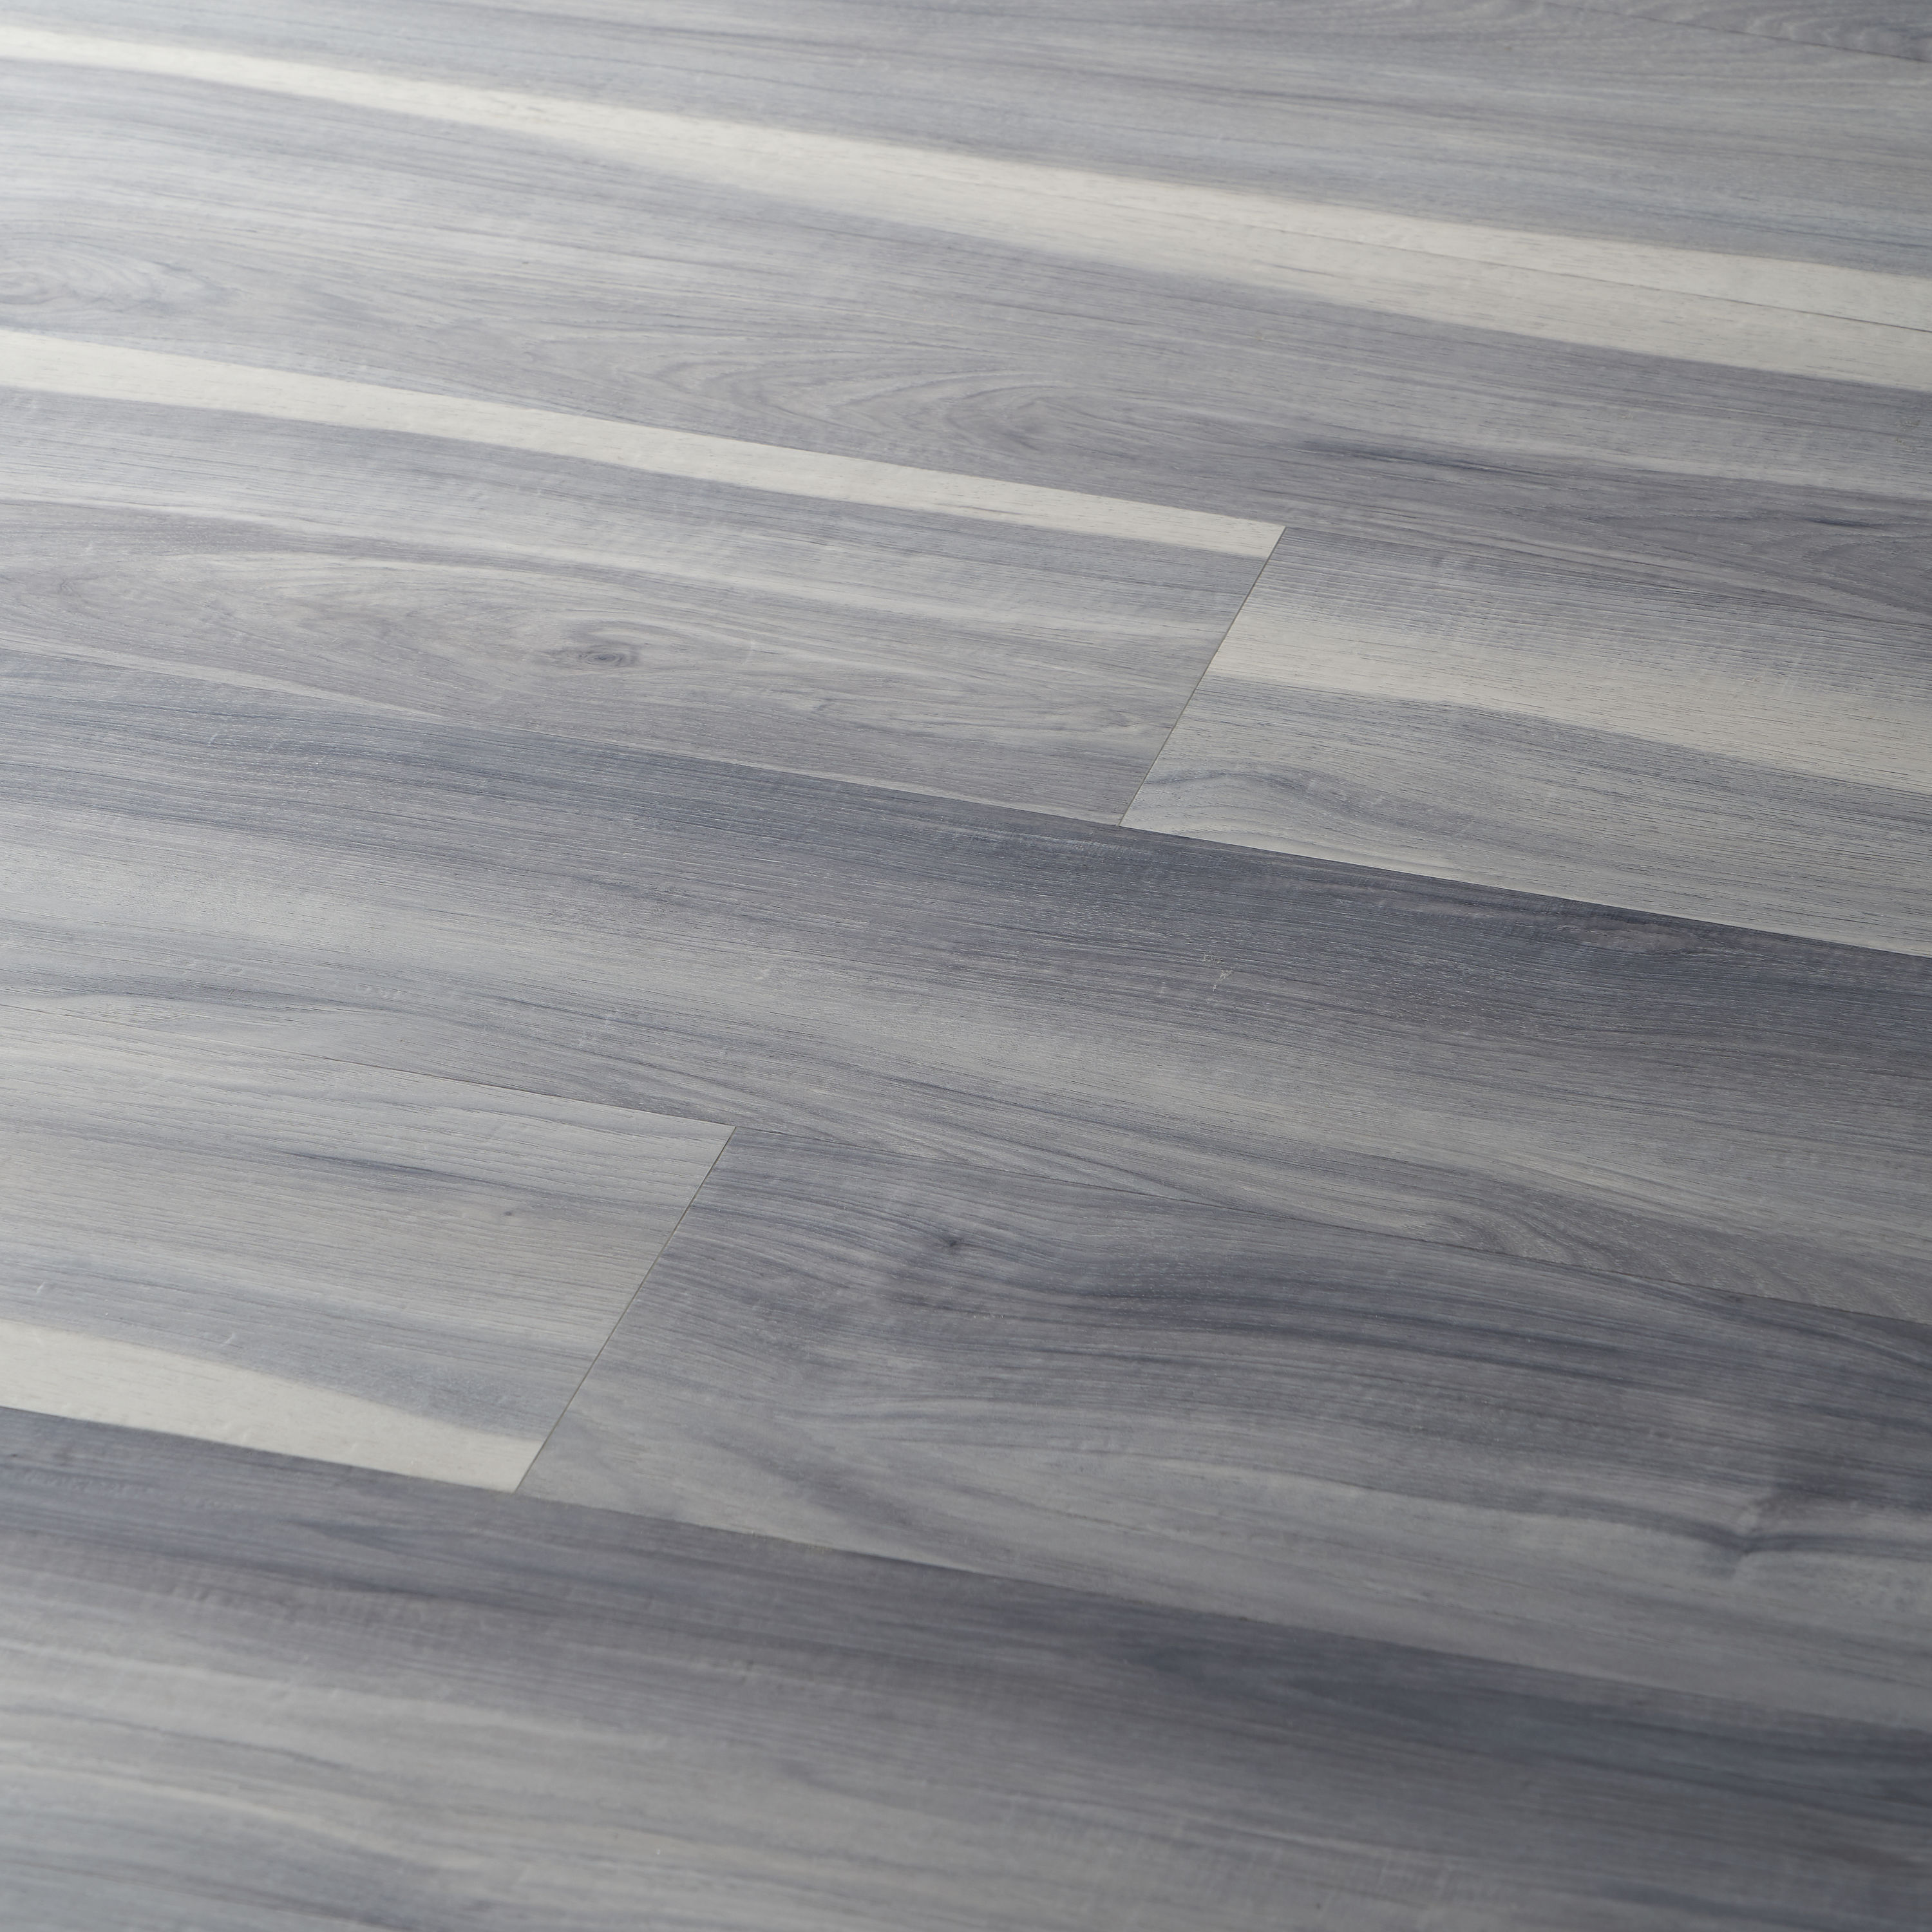 PRICE DROP ALERT - Toli Solid Vinyl Waterproof Flooring - White Sycamore -  6 x 35 - Luxury Vinyl Plank 1911 SQFT Price : 1.09